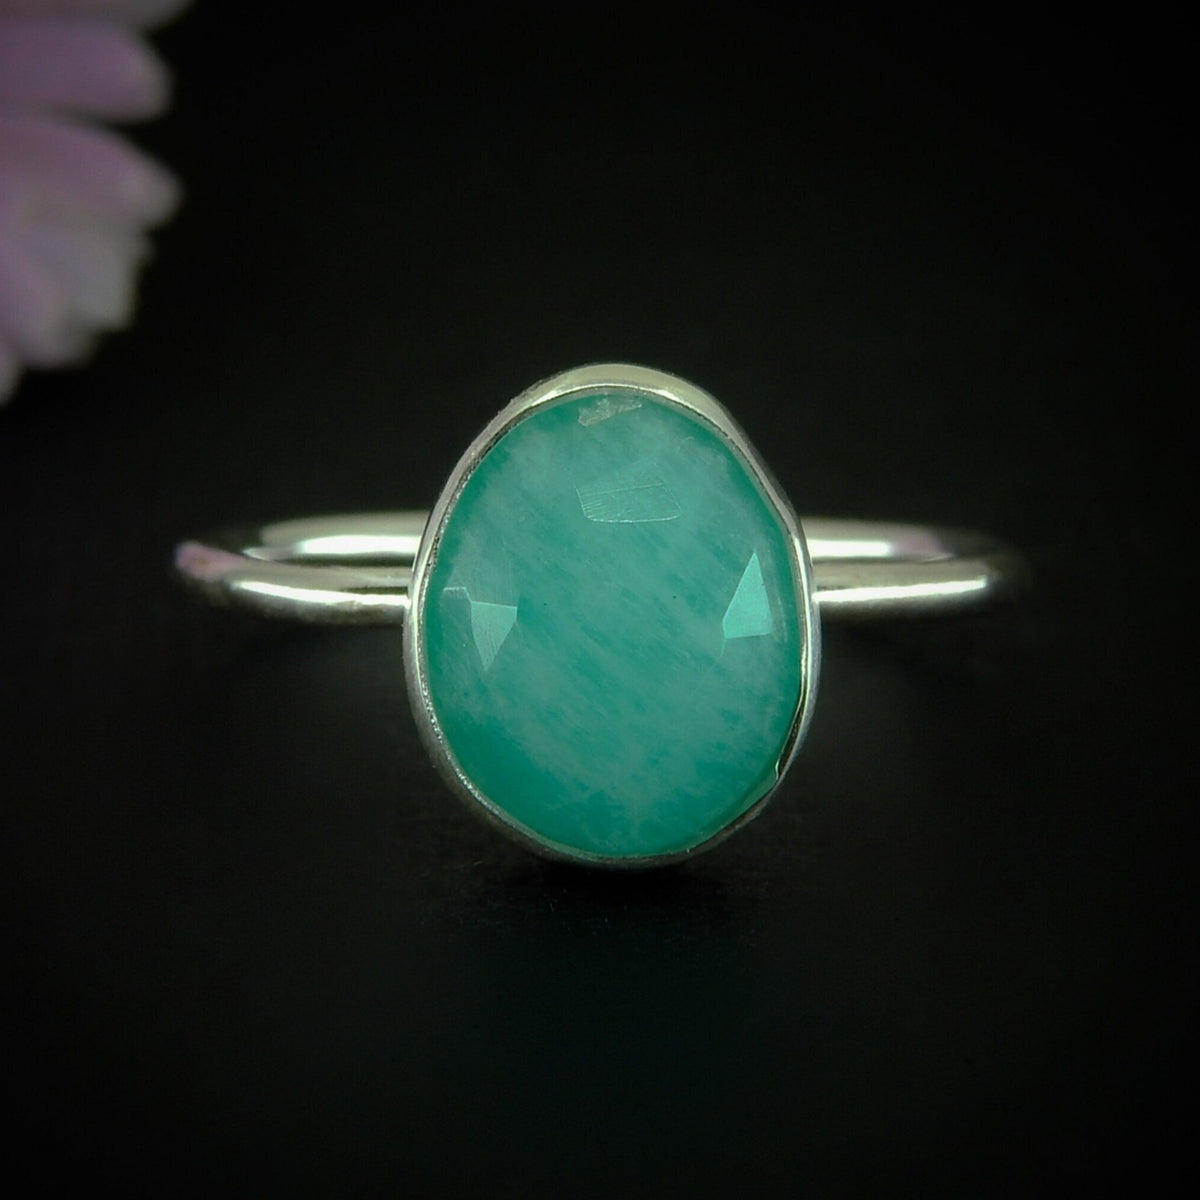 Rose Cut Amazonite Ring - Size 10 - Sterling Silver - Faceted Amazonite Jewelry - Teal Green Amazonite Ring, OOAK Dainty Amazonite Jewellery